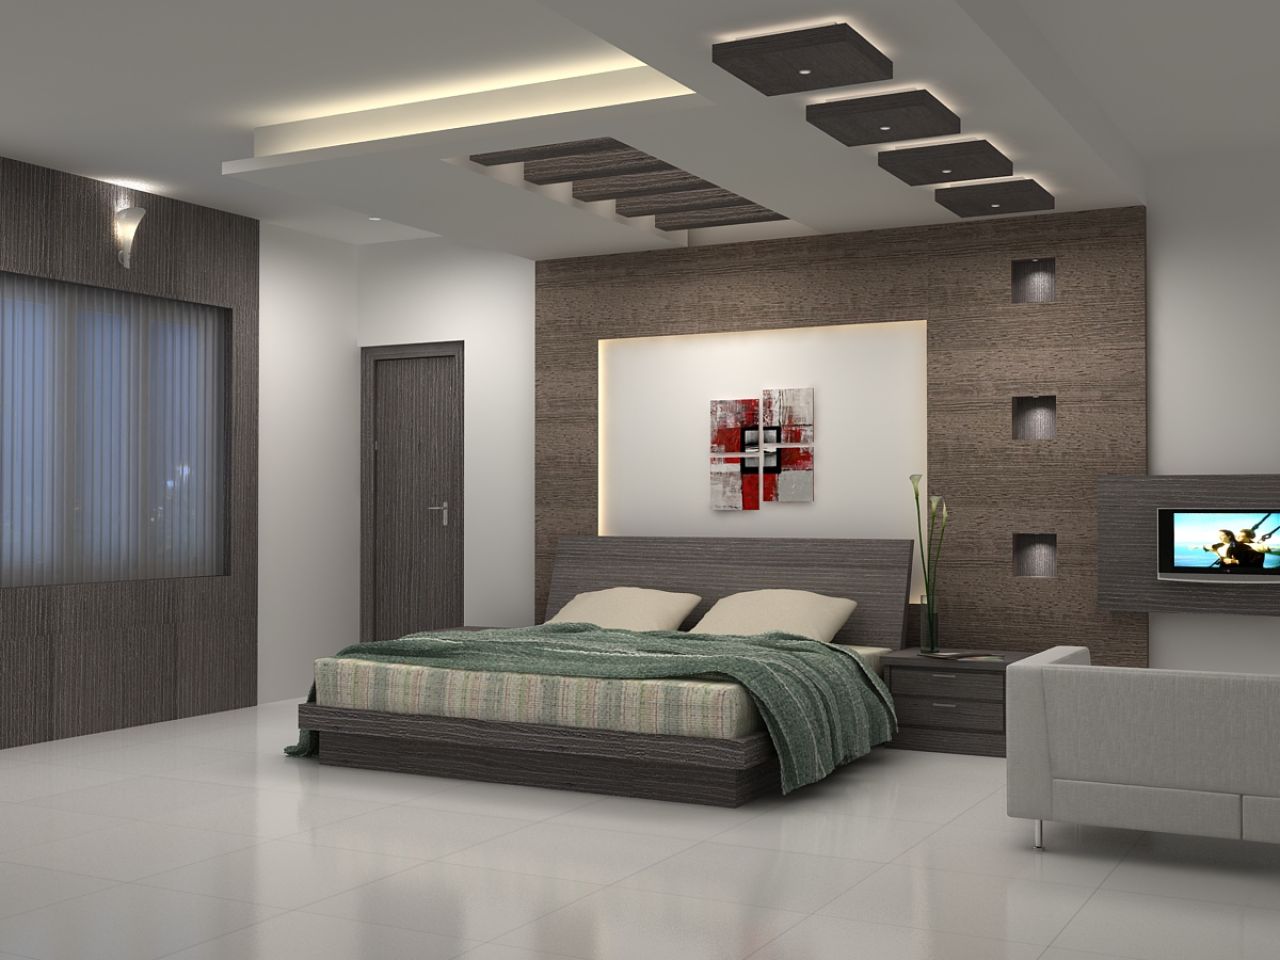 Diy Master Bedroom Ceiling Decor